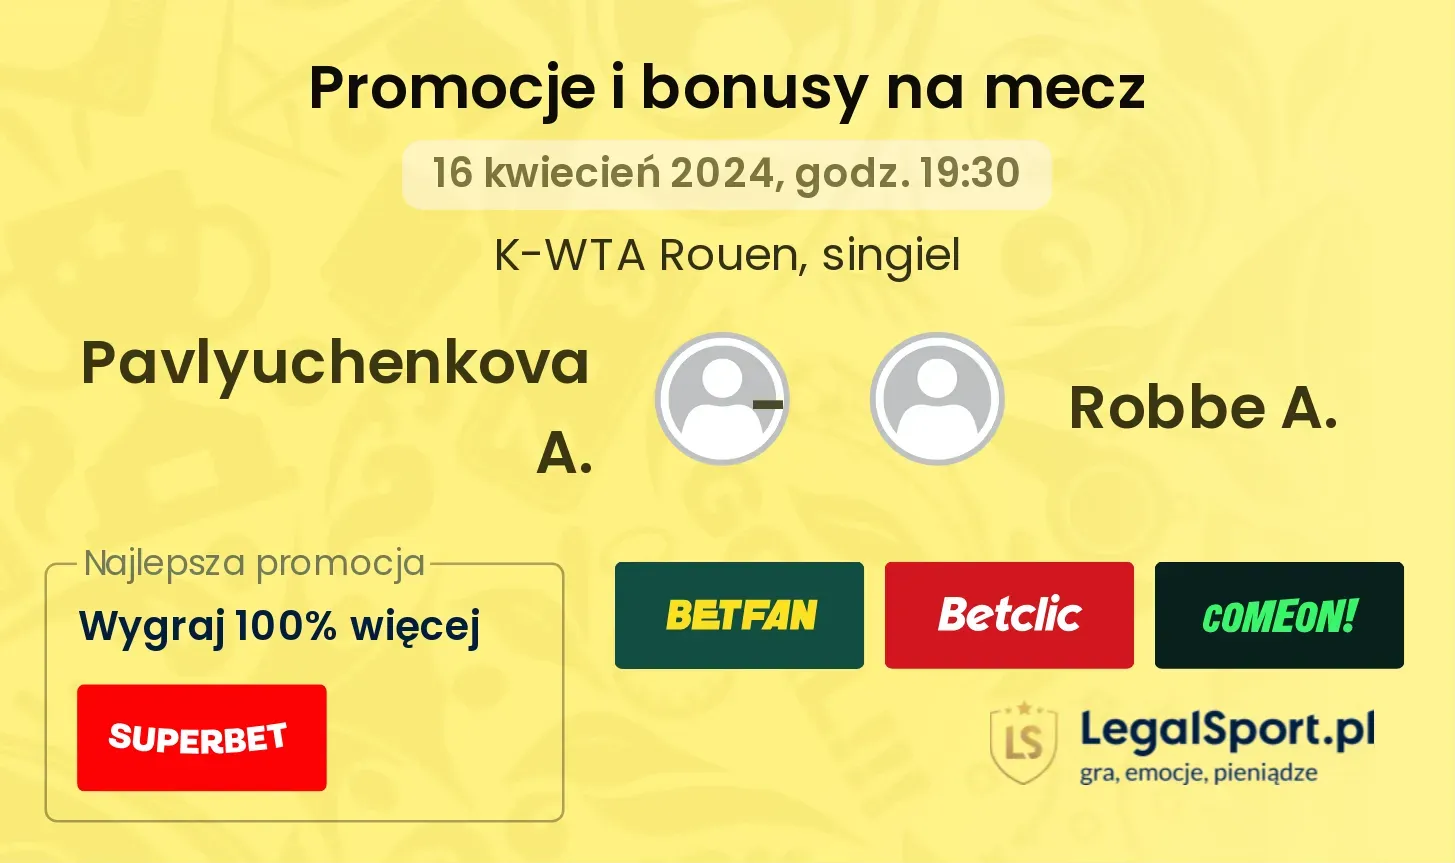 Pavlyuchenkova A. - Robbe A. promocje bonusy na mecz